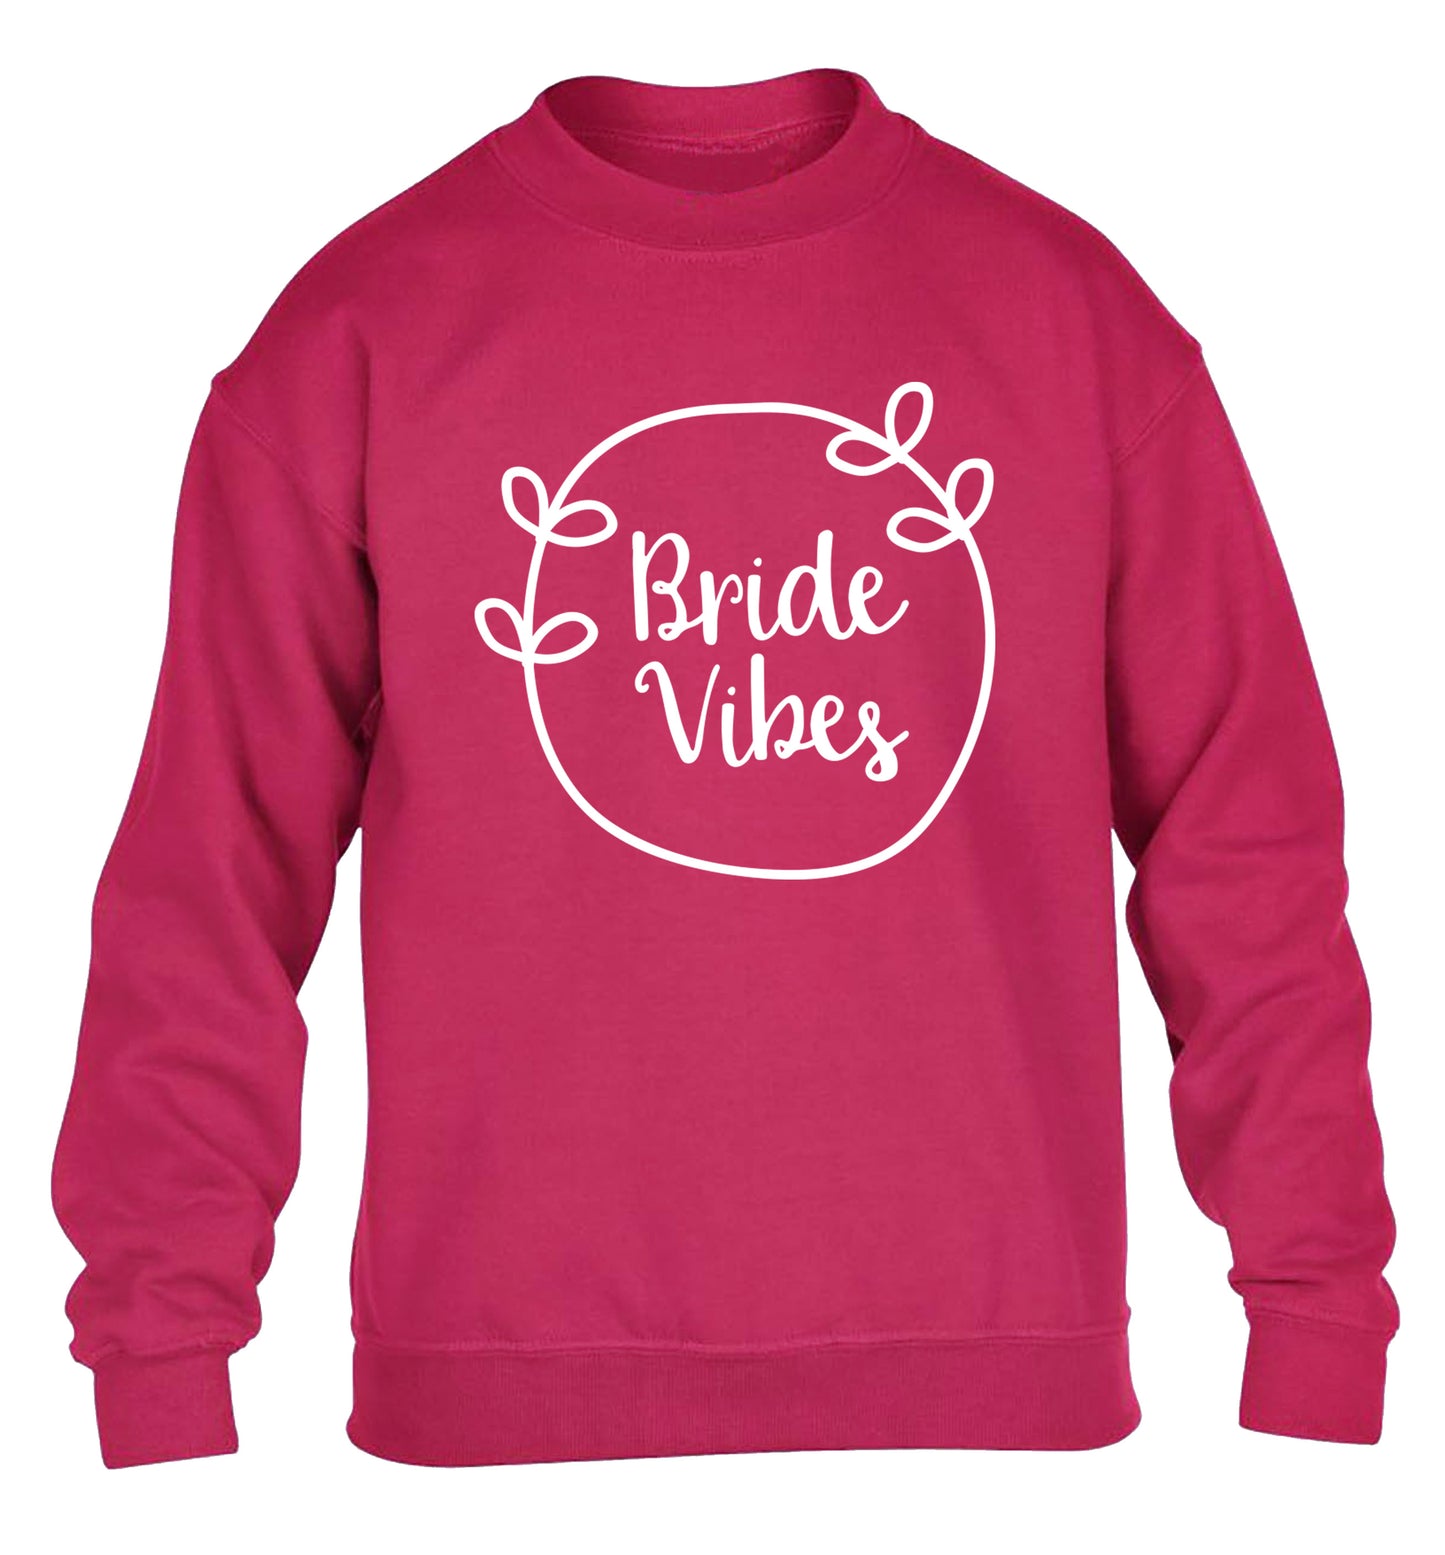 Bride Vibes children's pink sweater 12-13 Years